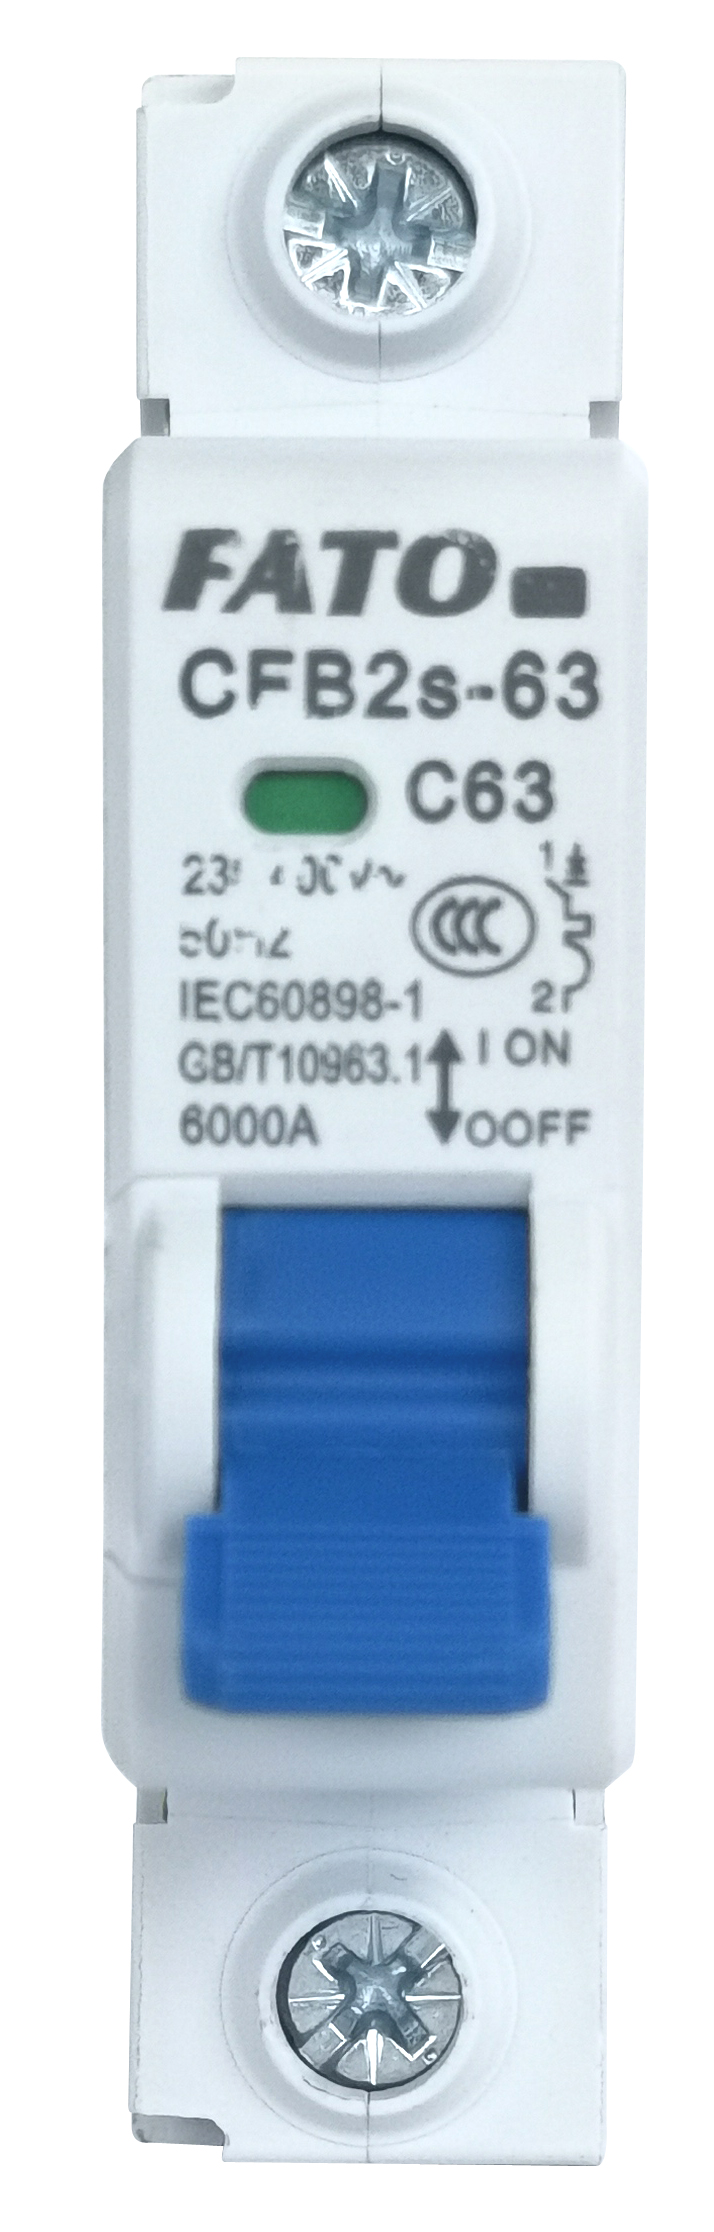 CFB2s-63小型断路器